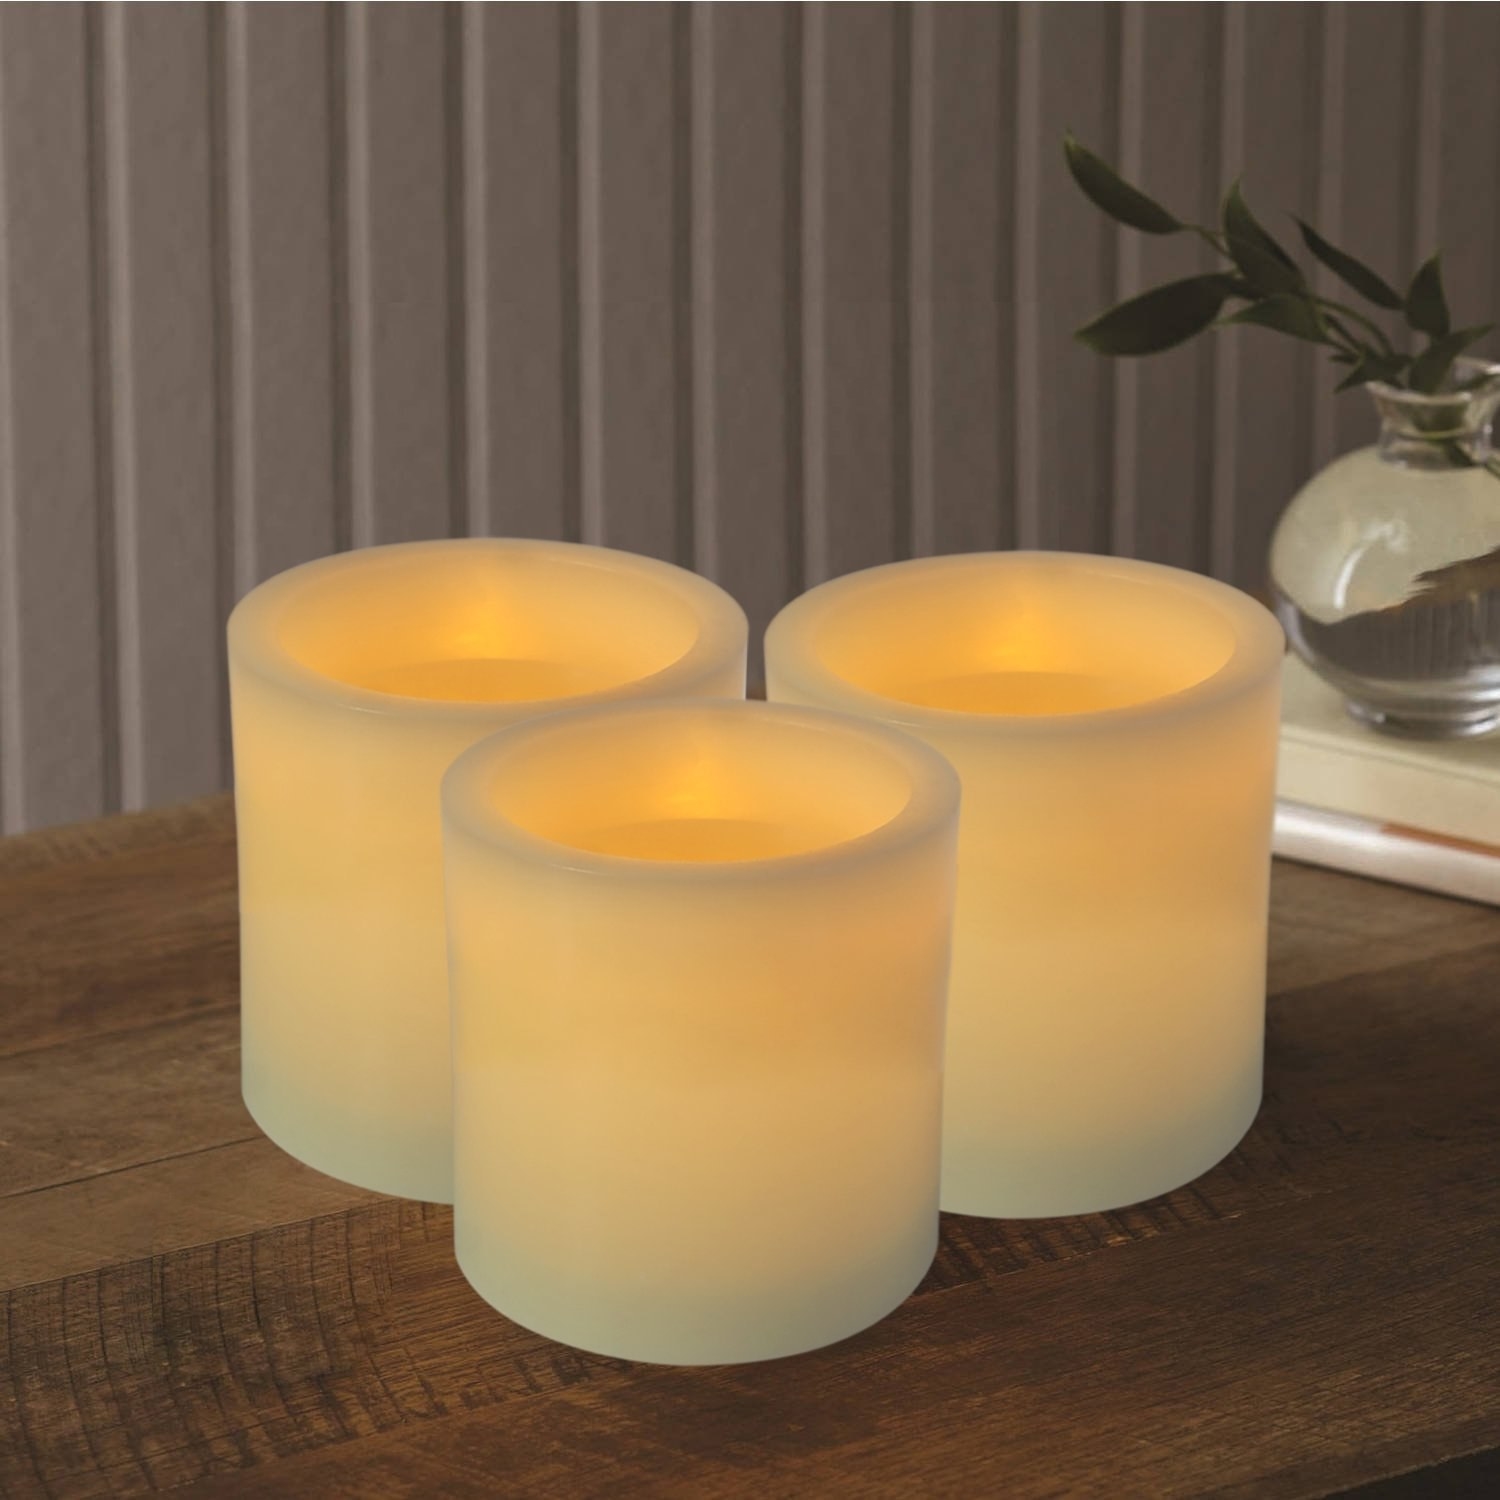 Four off white illuminated pillar candles